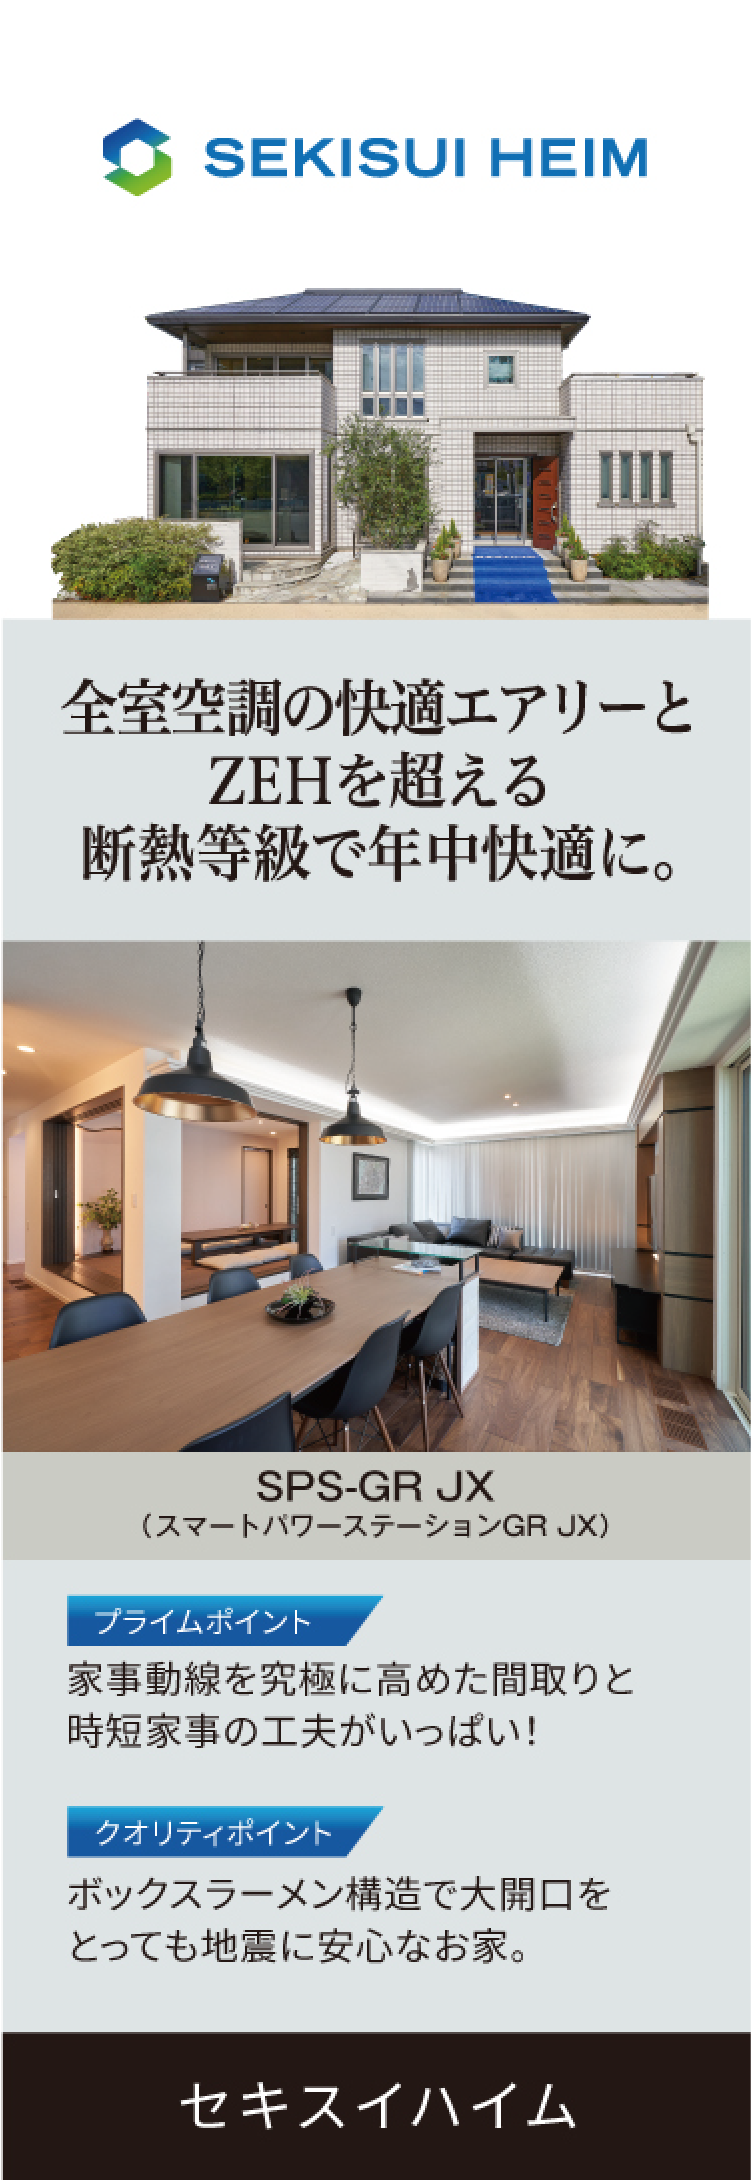 SEKISUI HEIM | 全室空調の快適エアリーとZEHを超える断熱等級で年中快適に。